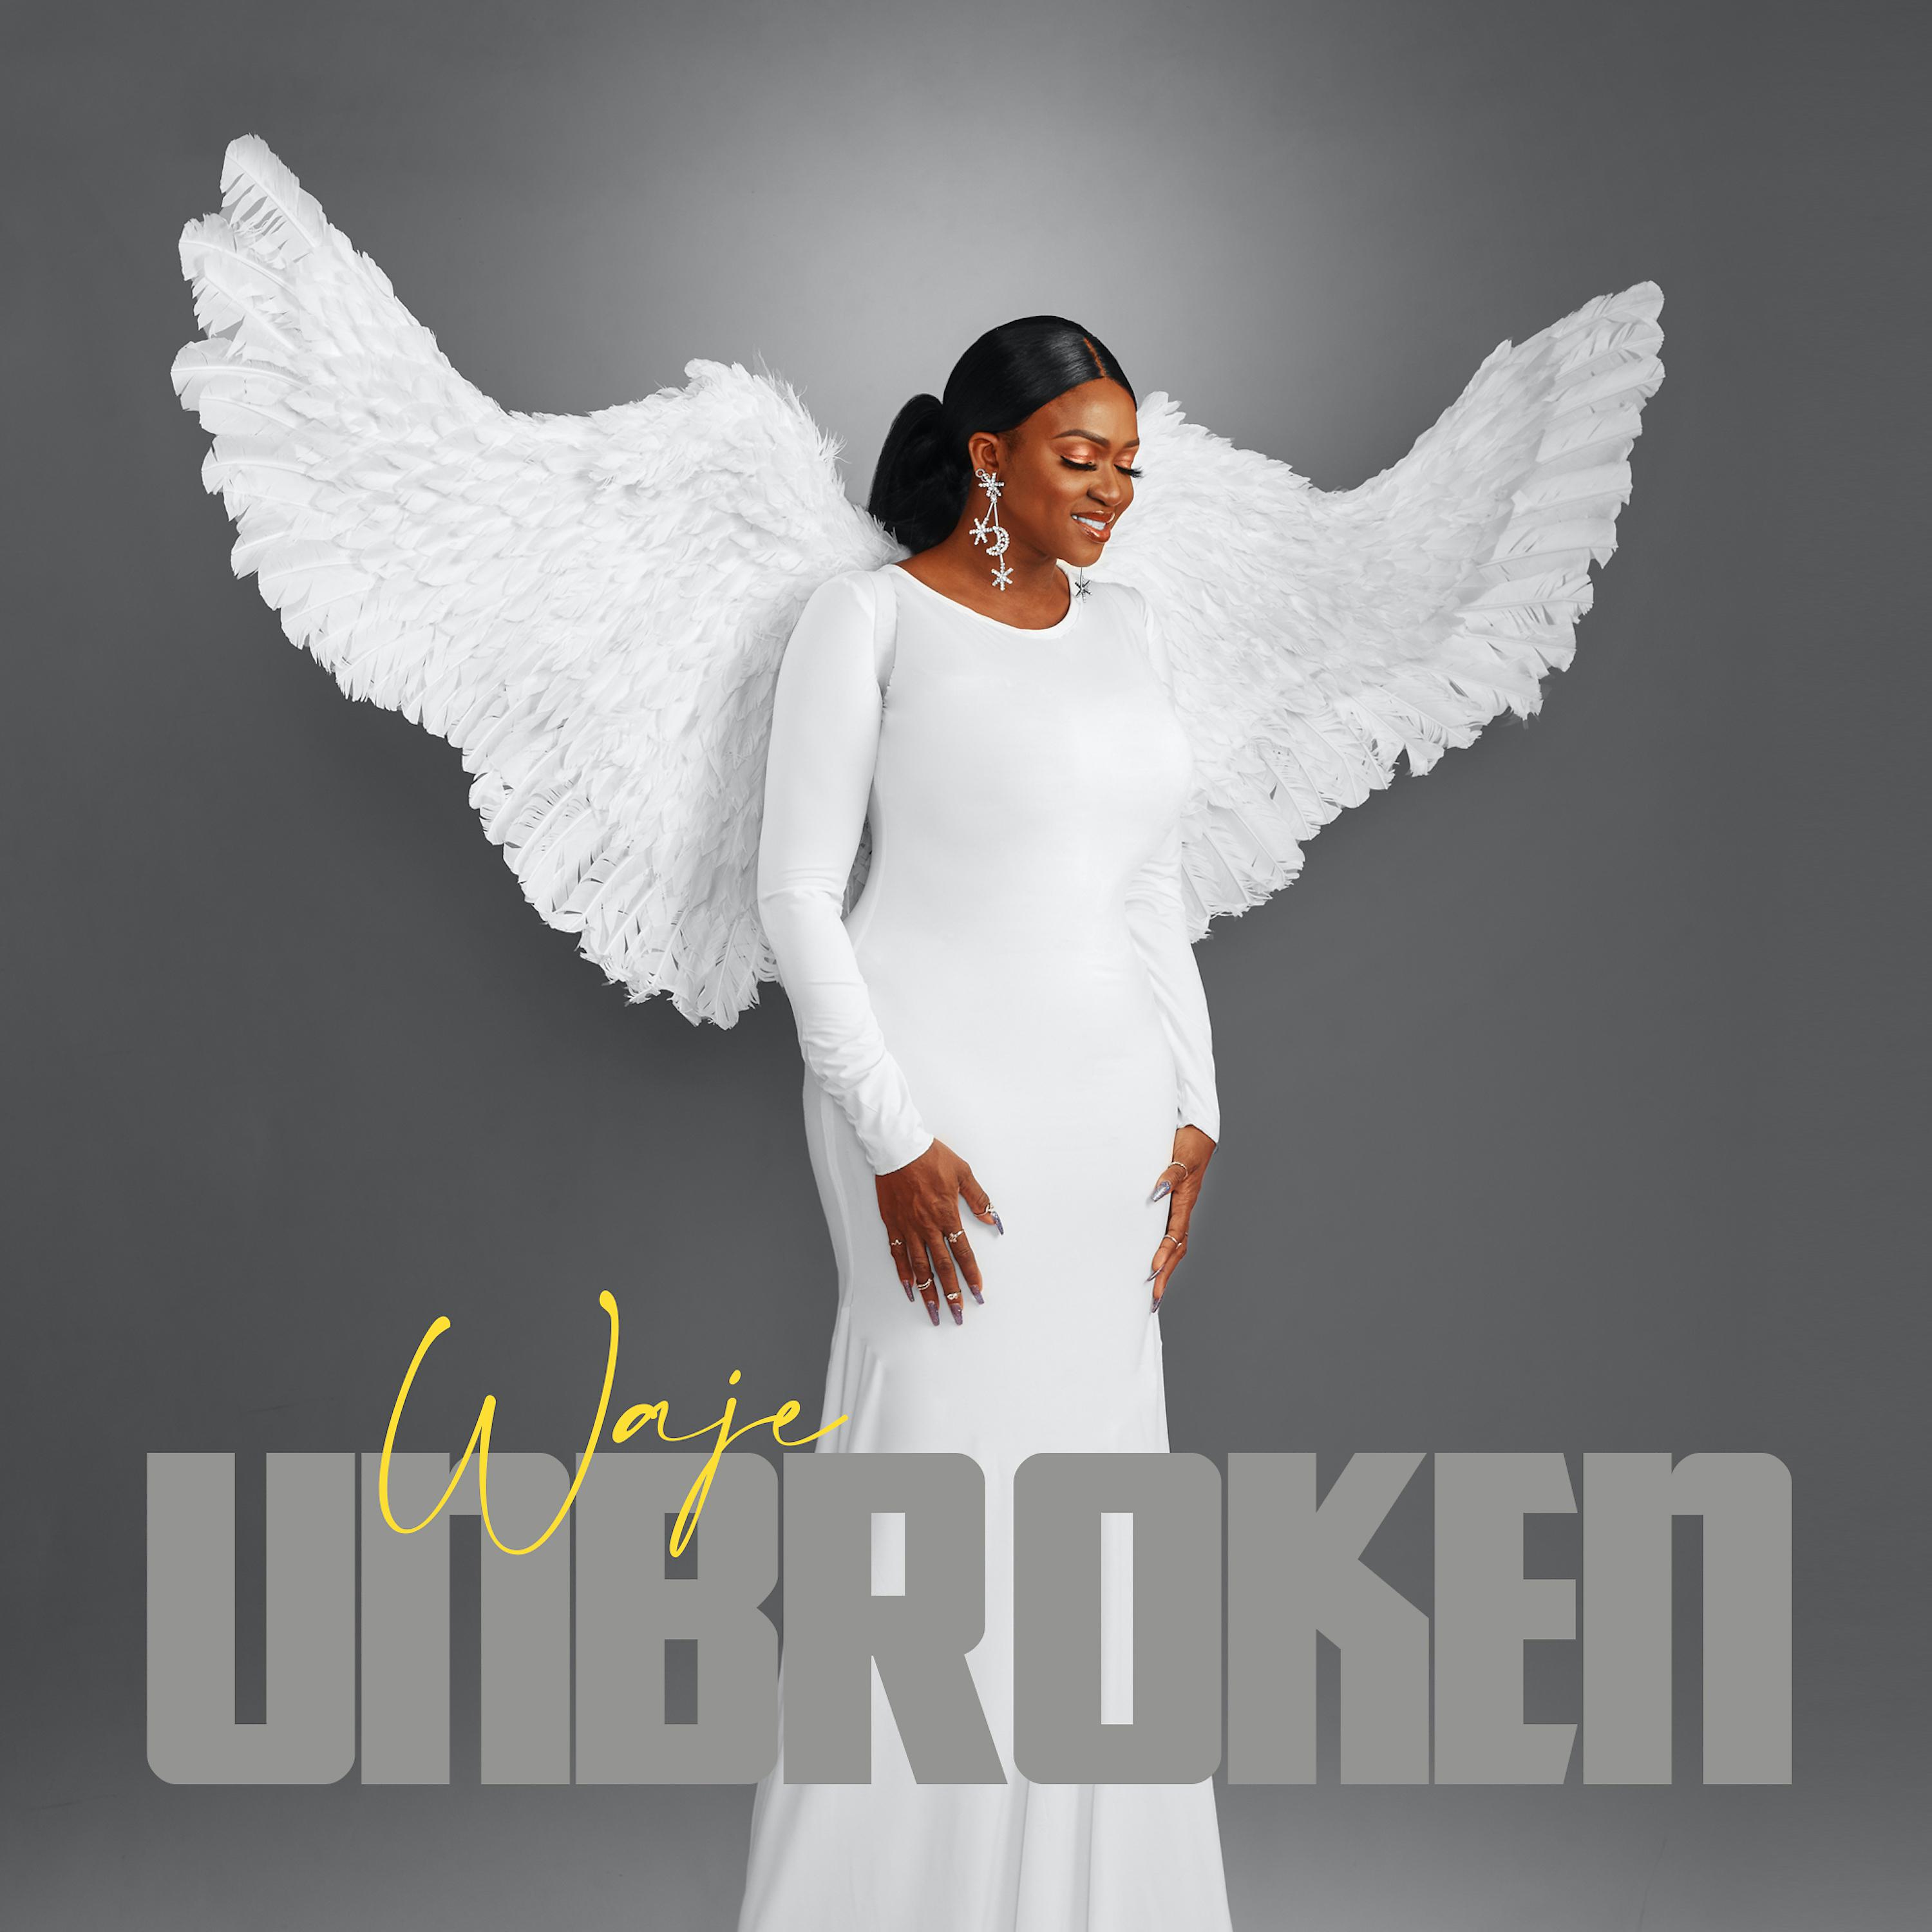 Постер альбома Unbroken